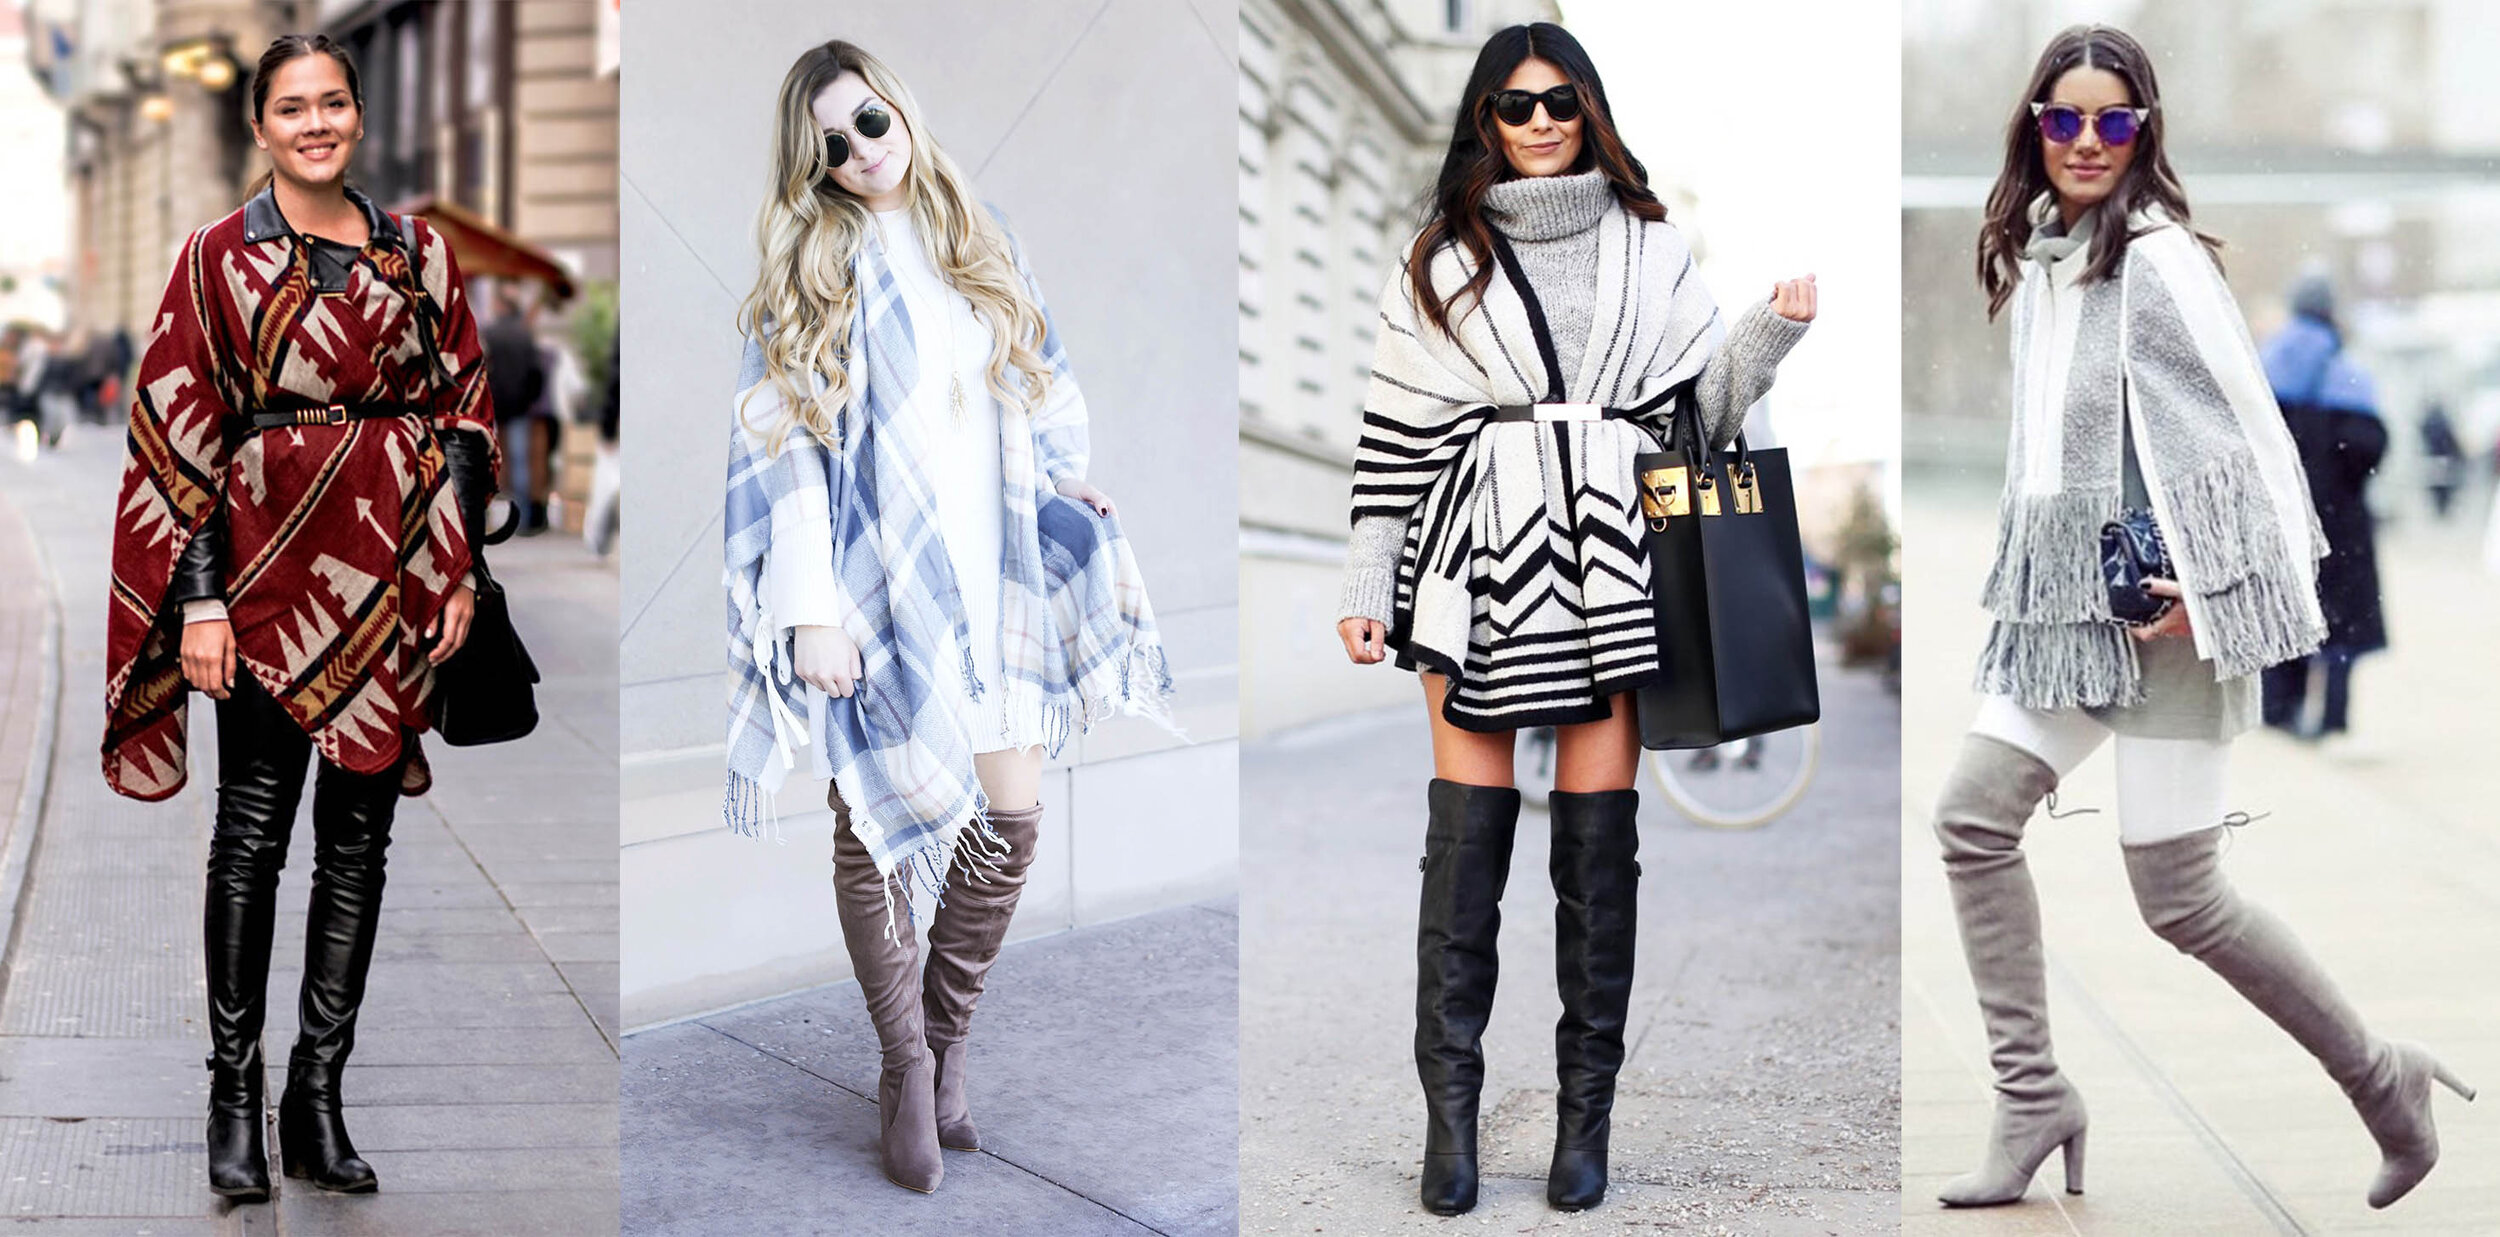 Winter tops | HOWTOWEAR Fashion